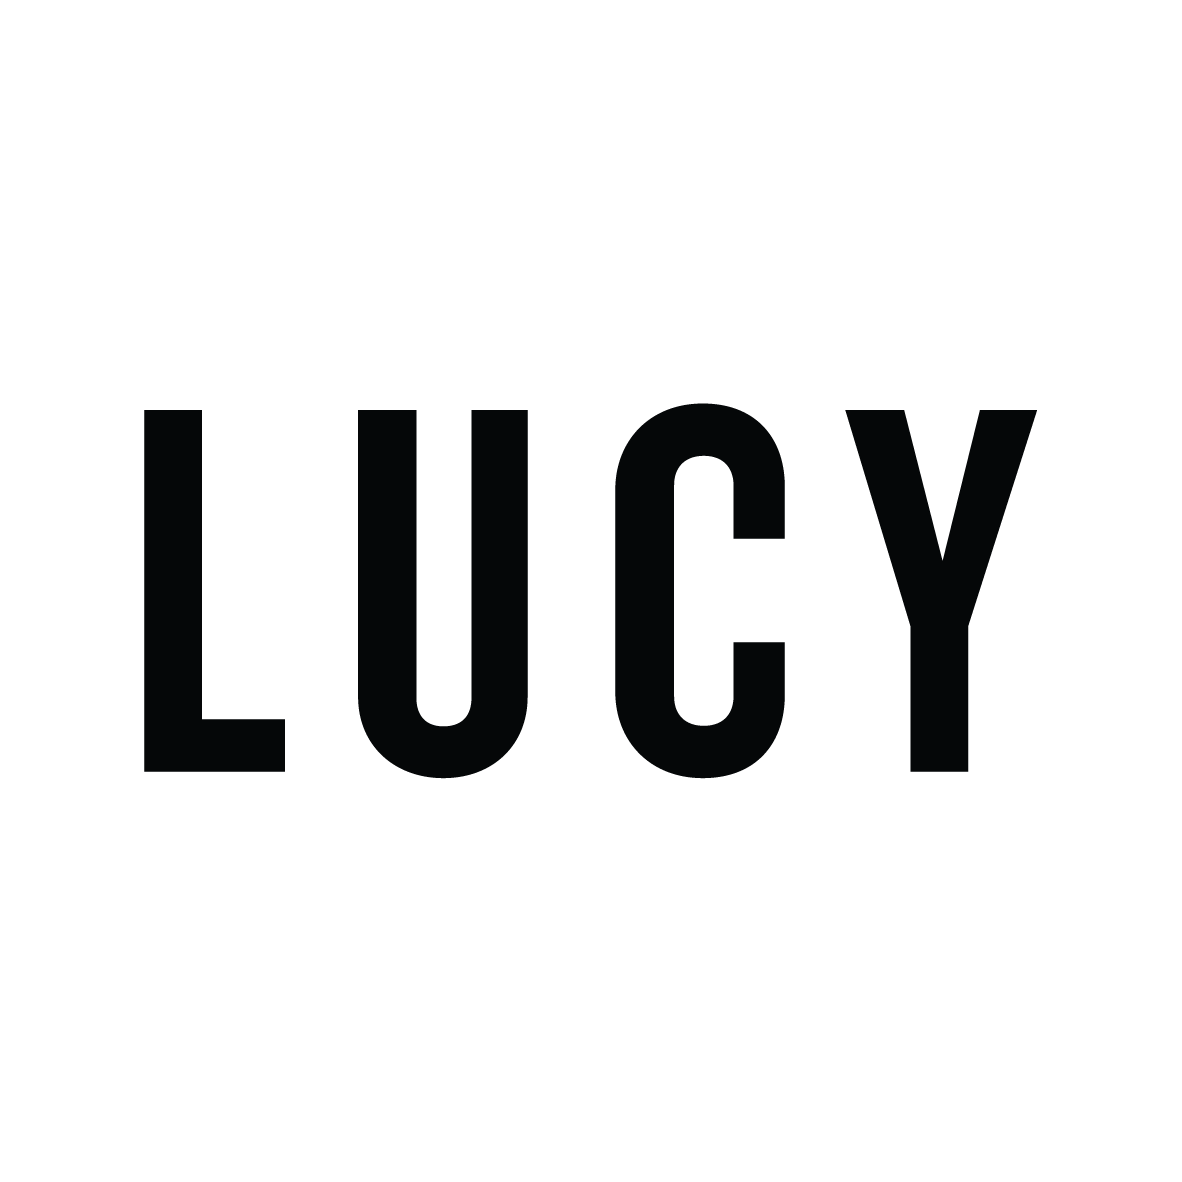 Download Lucy Logo - LogoDix